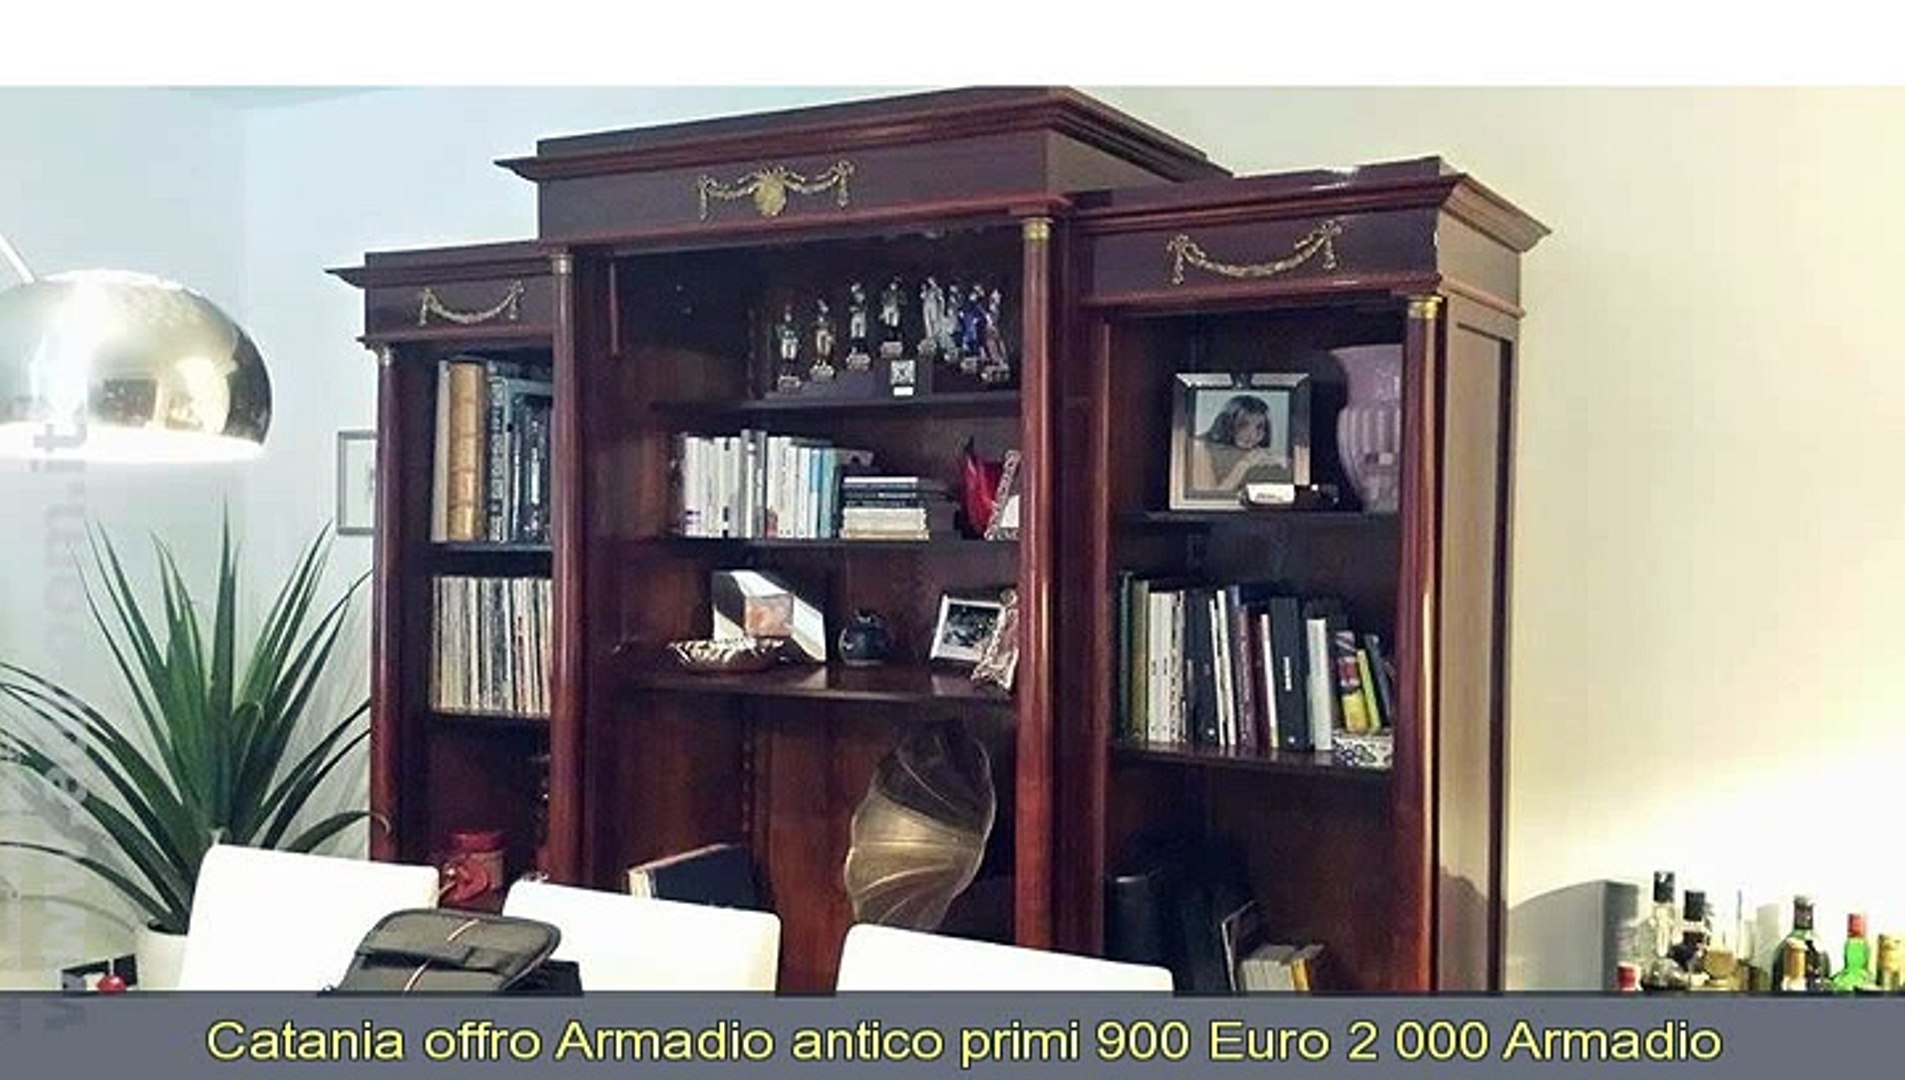 CATANIA, ACI CASTELLO ARMADIO ANTICO PRIMI 900 EURO 2.000 - Video  Dailymotion